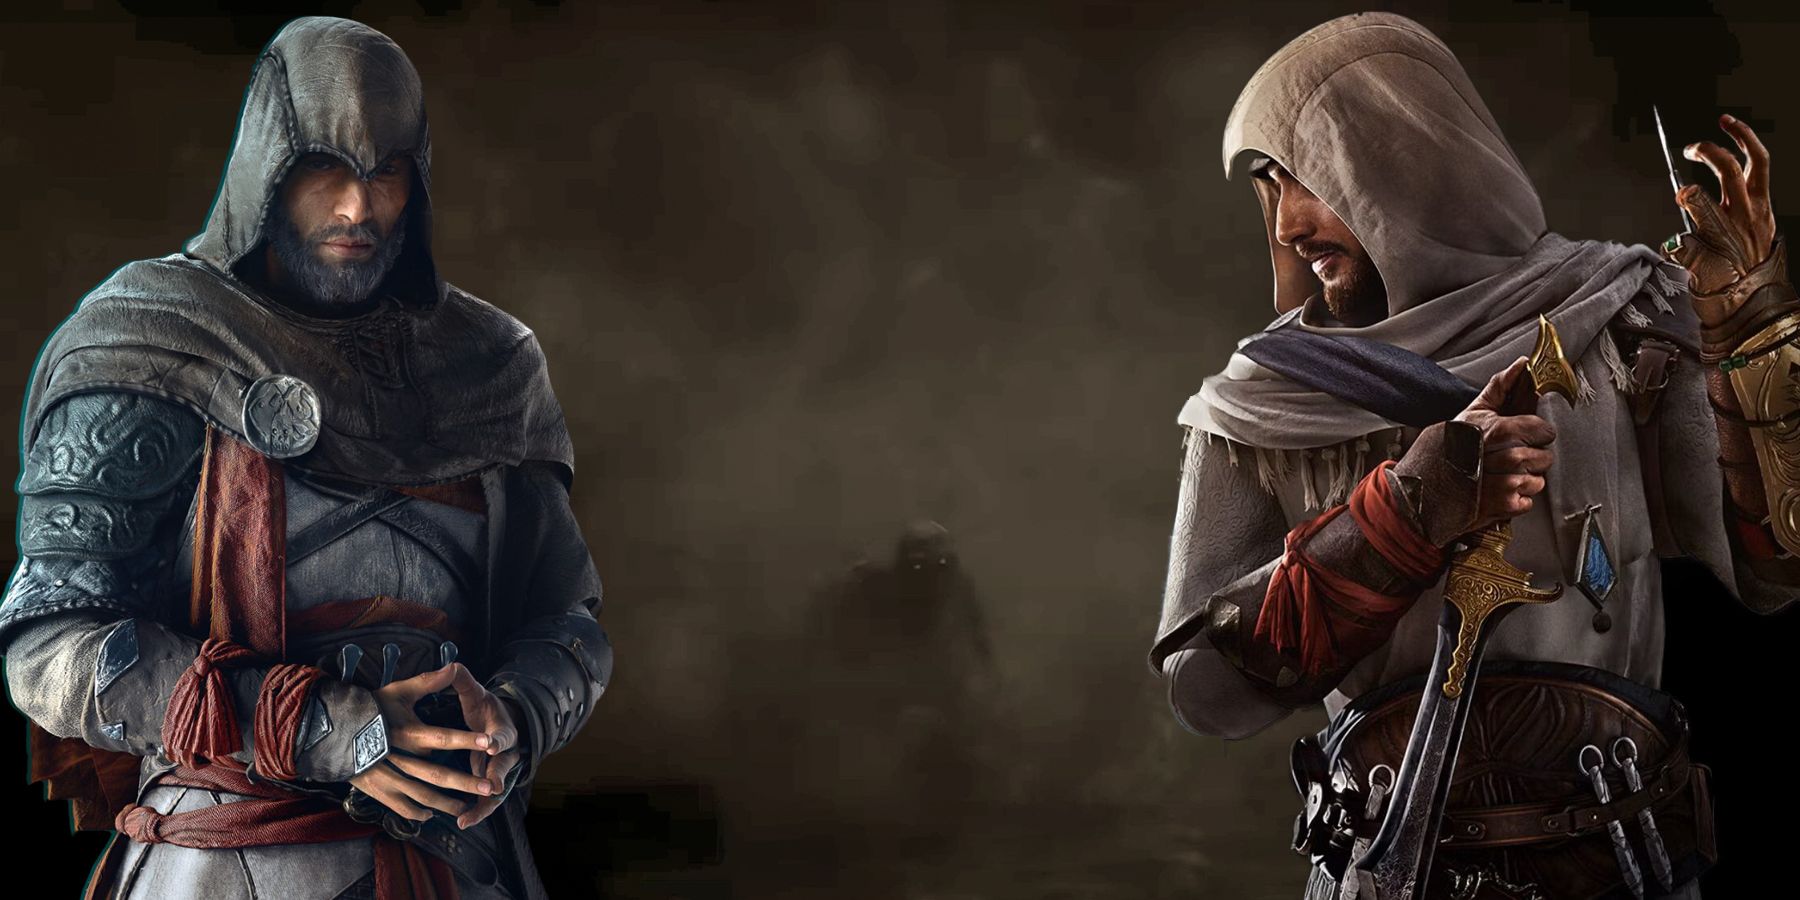 Assassin’s Creed® Mirage Jinn Pack